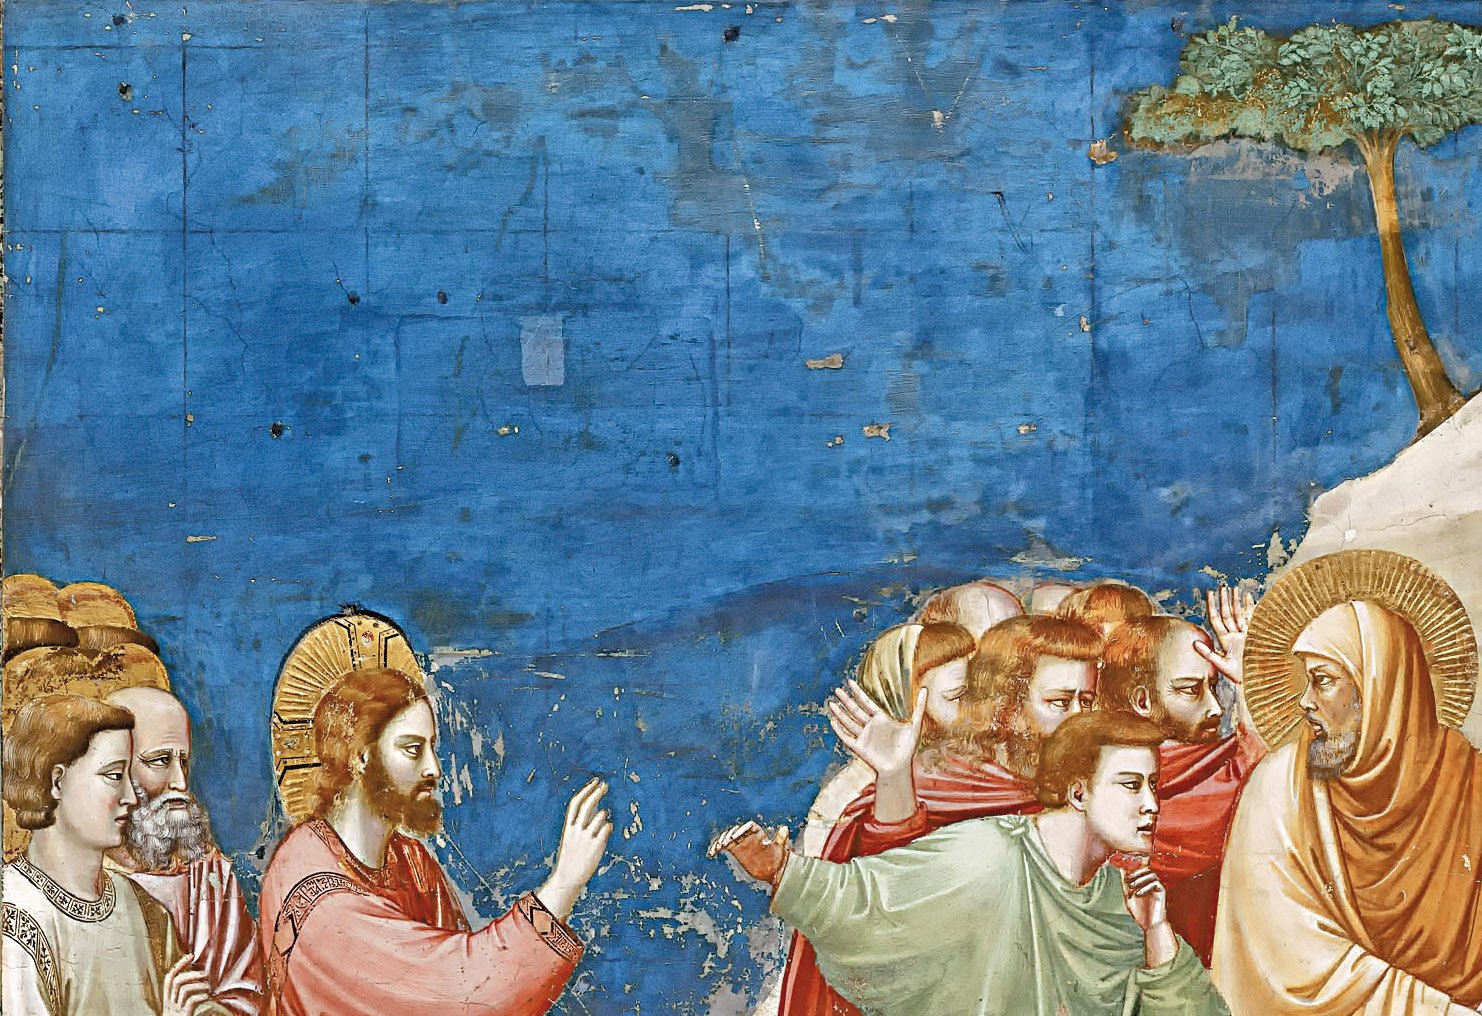 Giotto, "Resurrection of Lazarus", detail, 1303 - 1305, Scrovegni Chapel, Padua